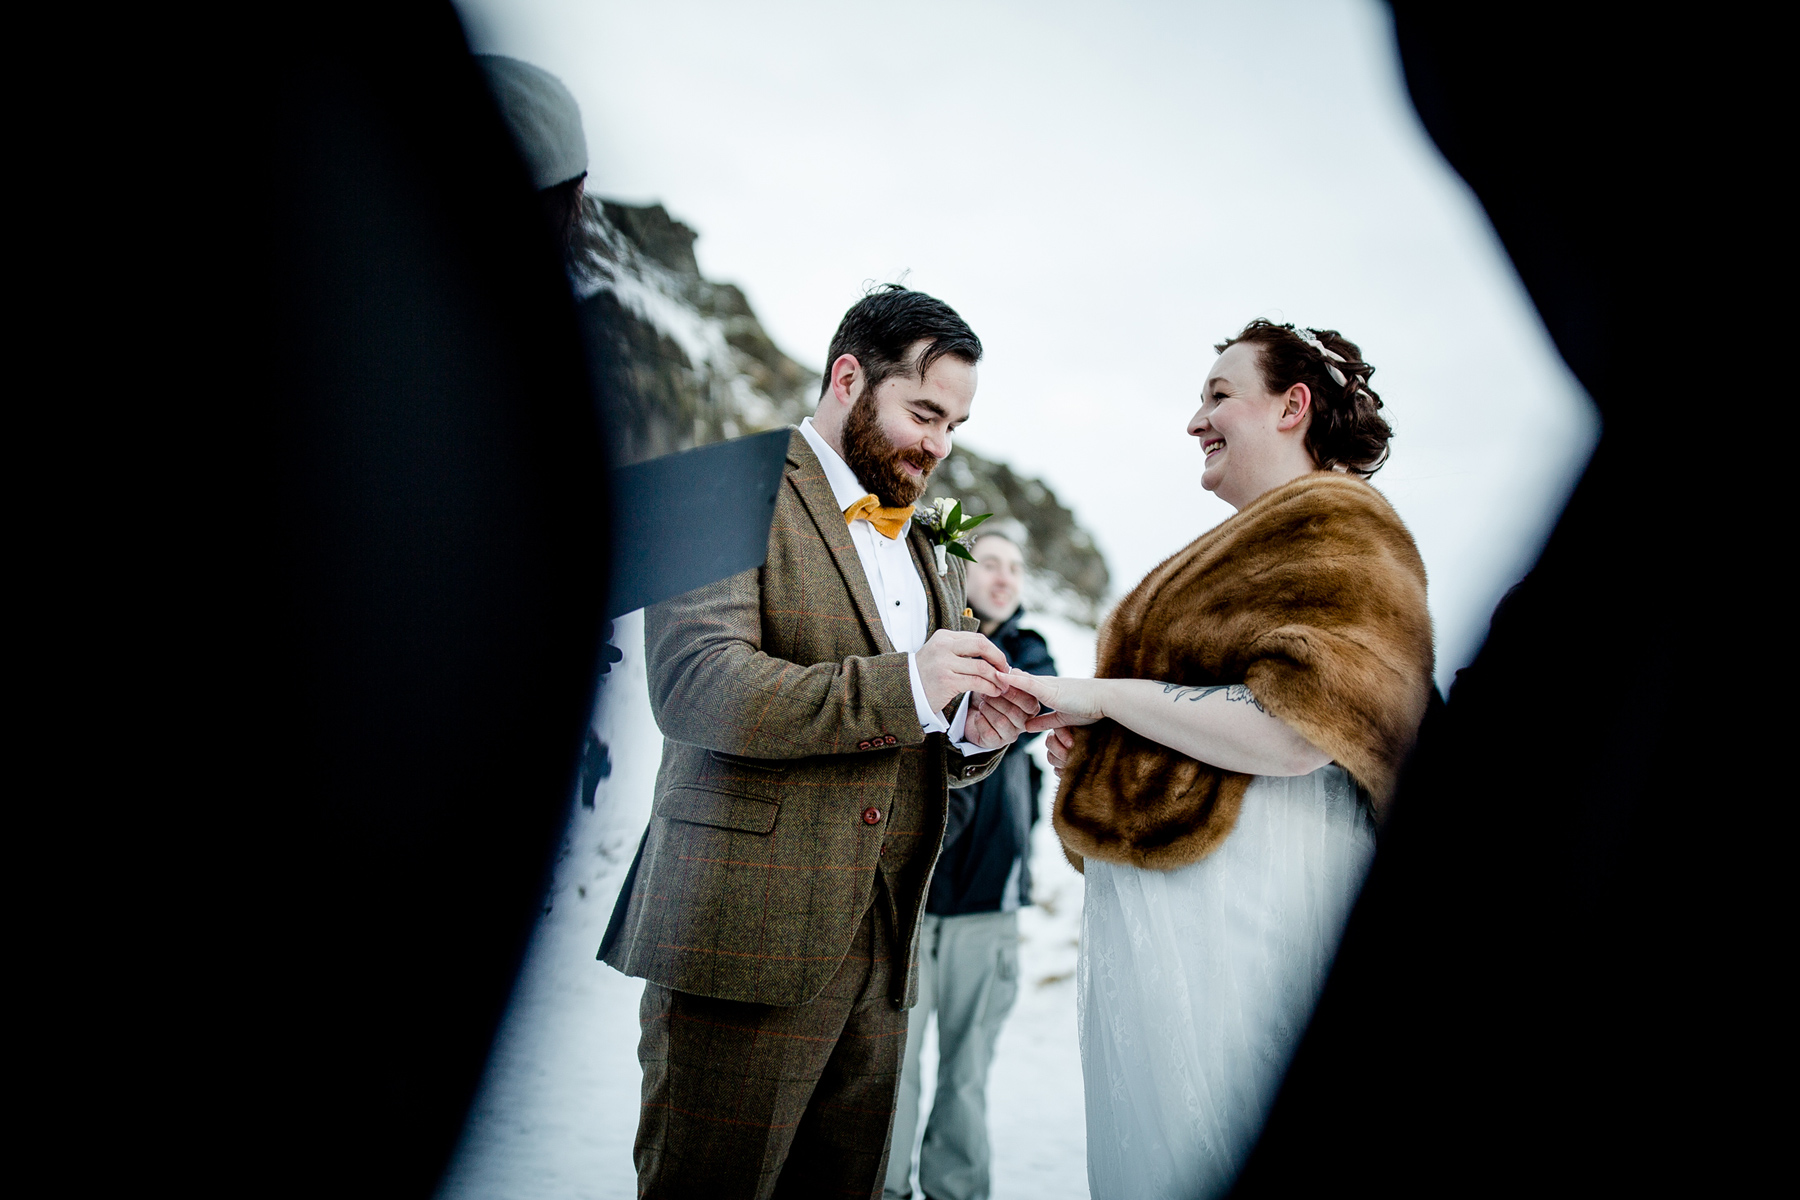 seljalandsfoss wedding photogoraphy, iceland, game of thrones